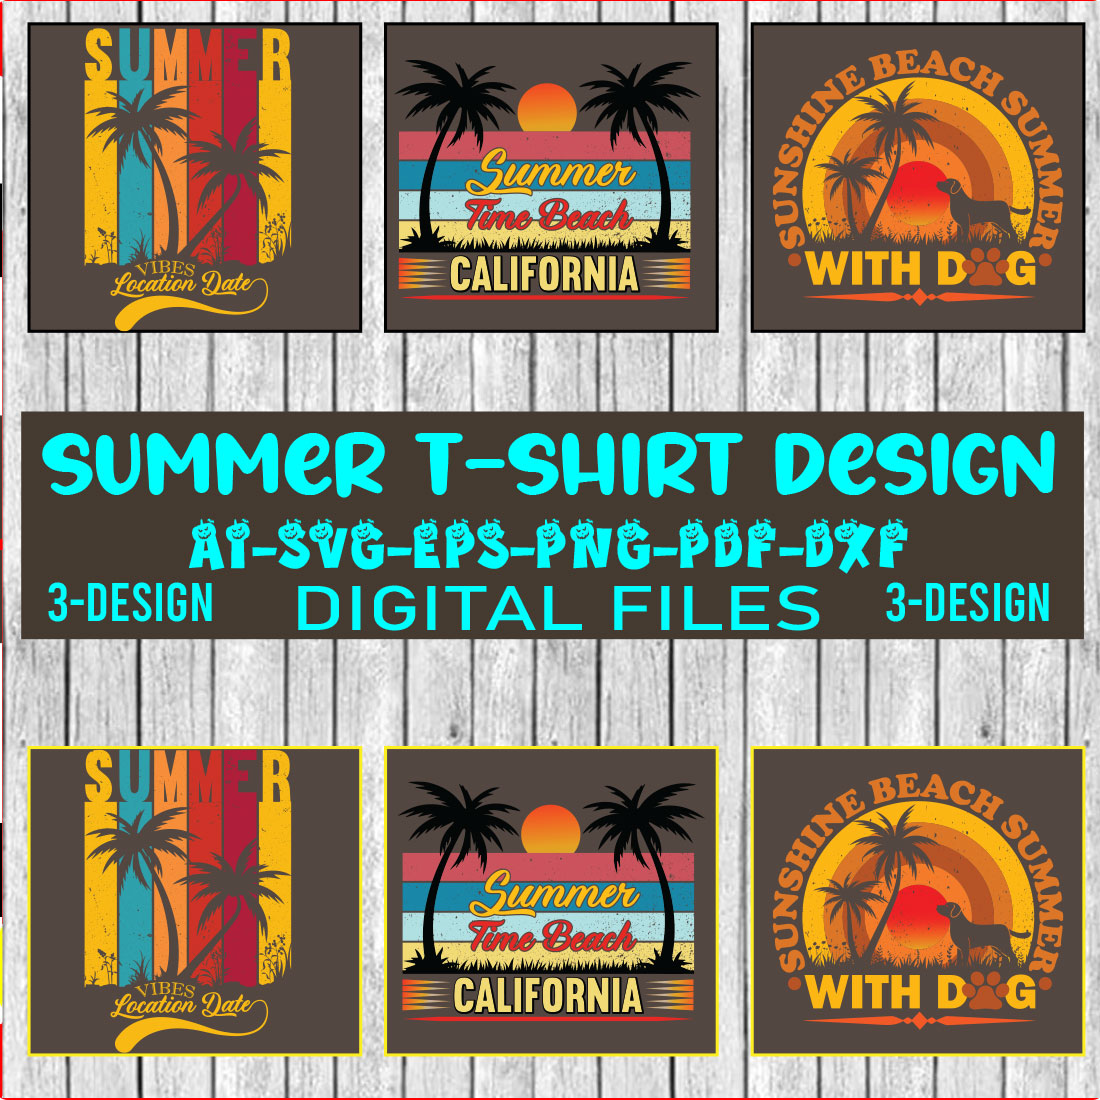 Summer T-shirt Design Vol-04 cover image.